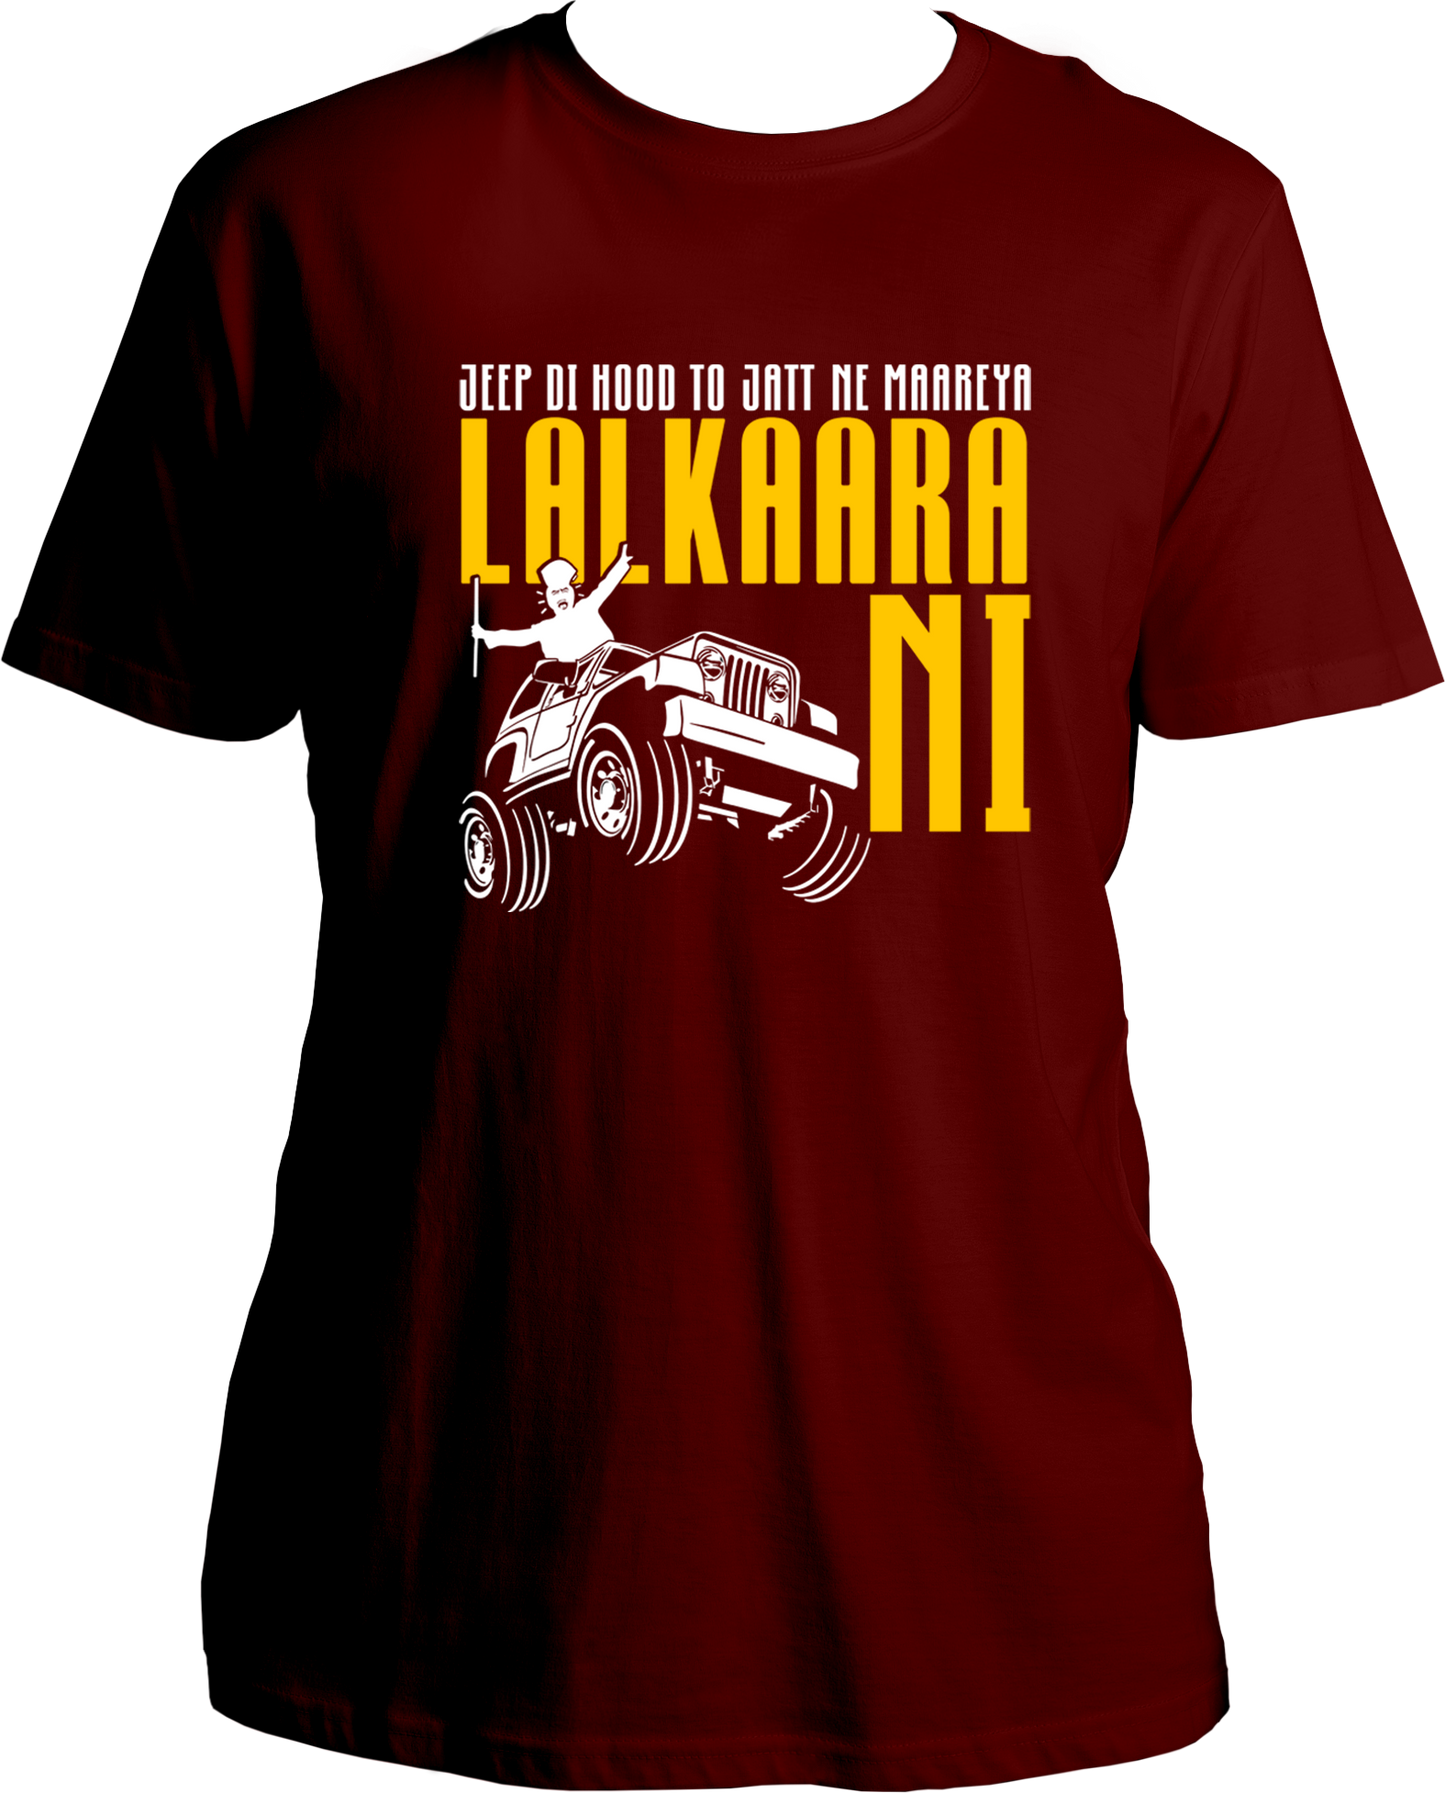 Lalkaara Unisex T-Shirts